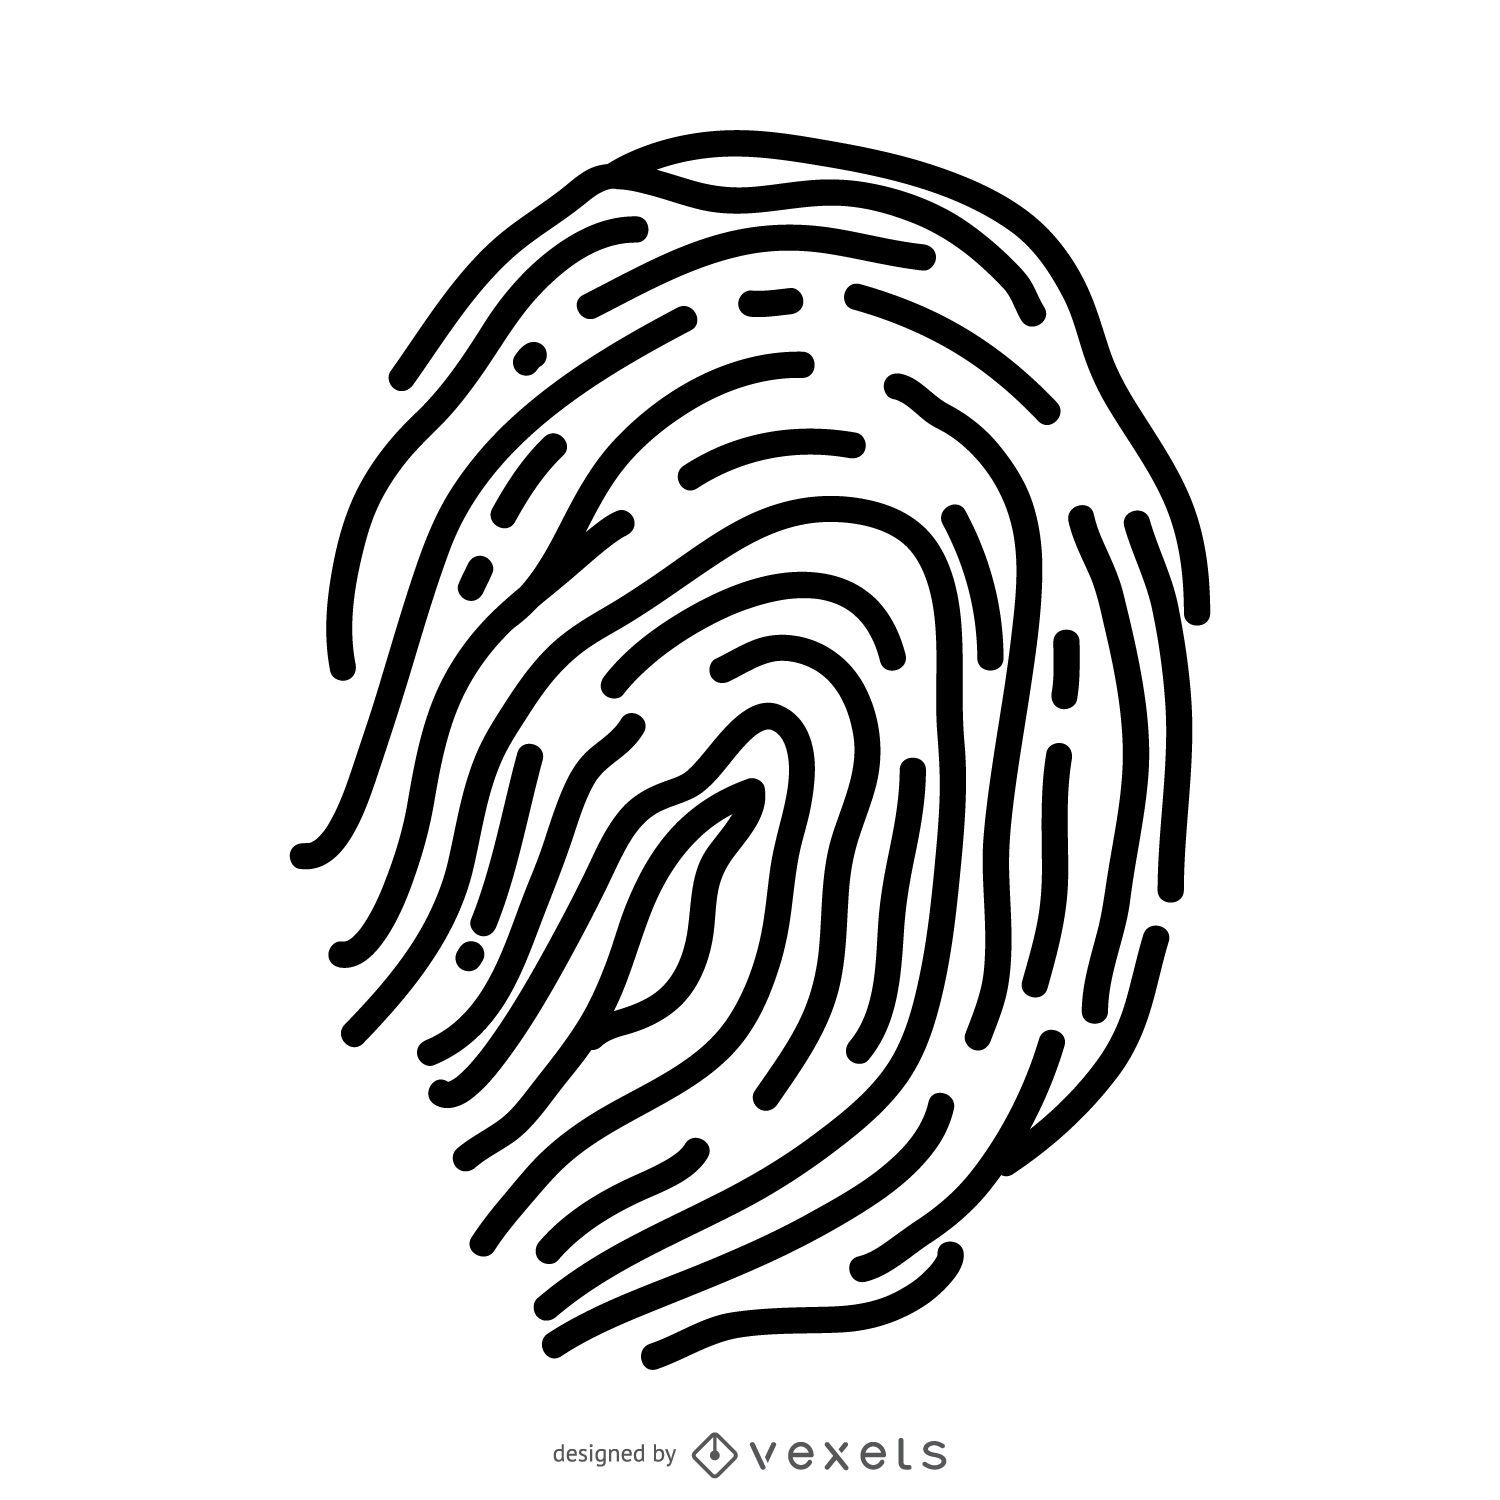 Minimalist fingerprint silhouette